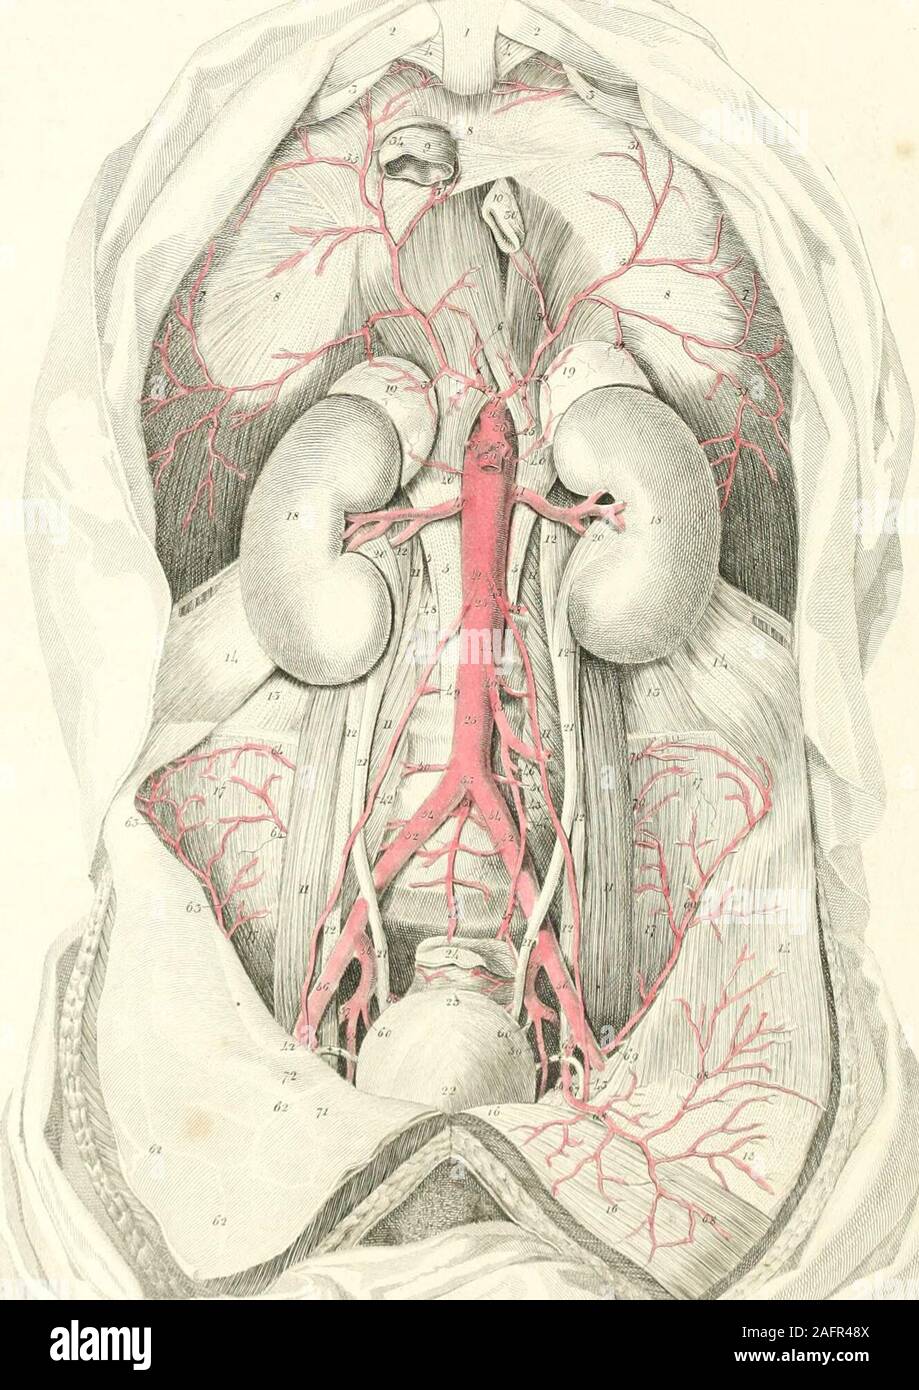 . Piastre di le arterie del corpo umano. e aorta.tronco di tlie arteria innominata.succlavia di destra.La arteria carotide.L'arteria carotidea sinistra.arteria succlavia sinistra.arteria bronchiale del lato destro.sinistra arteria bronchiale, (w) o InferiorSuperior dorsalcostalcostal 29, 29, 29. Aorta discendente. 30, 30, 30. fEsophageal arterie. 31, 31. Arterie QEsophageal troncato. 32, 32, 32, 32, 32, 32, .32, 32, 32. Sinistra infe-rior o intercostale aortica .arterie. 3.3, 33, 33, 33, 33, 33. Rami posteriore.34, 34, 34, 34, 34, 34, 34. branciies. ^ f O^ O o*. o. o)... o^ 00, 00, 00, &LT;jo, oa, 00 Foto Stock